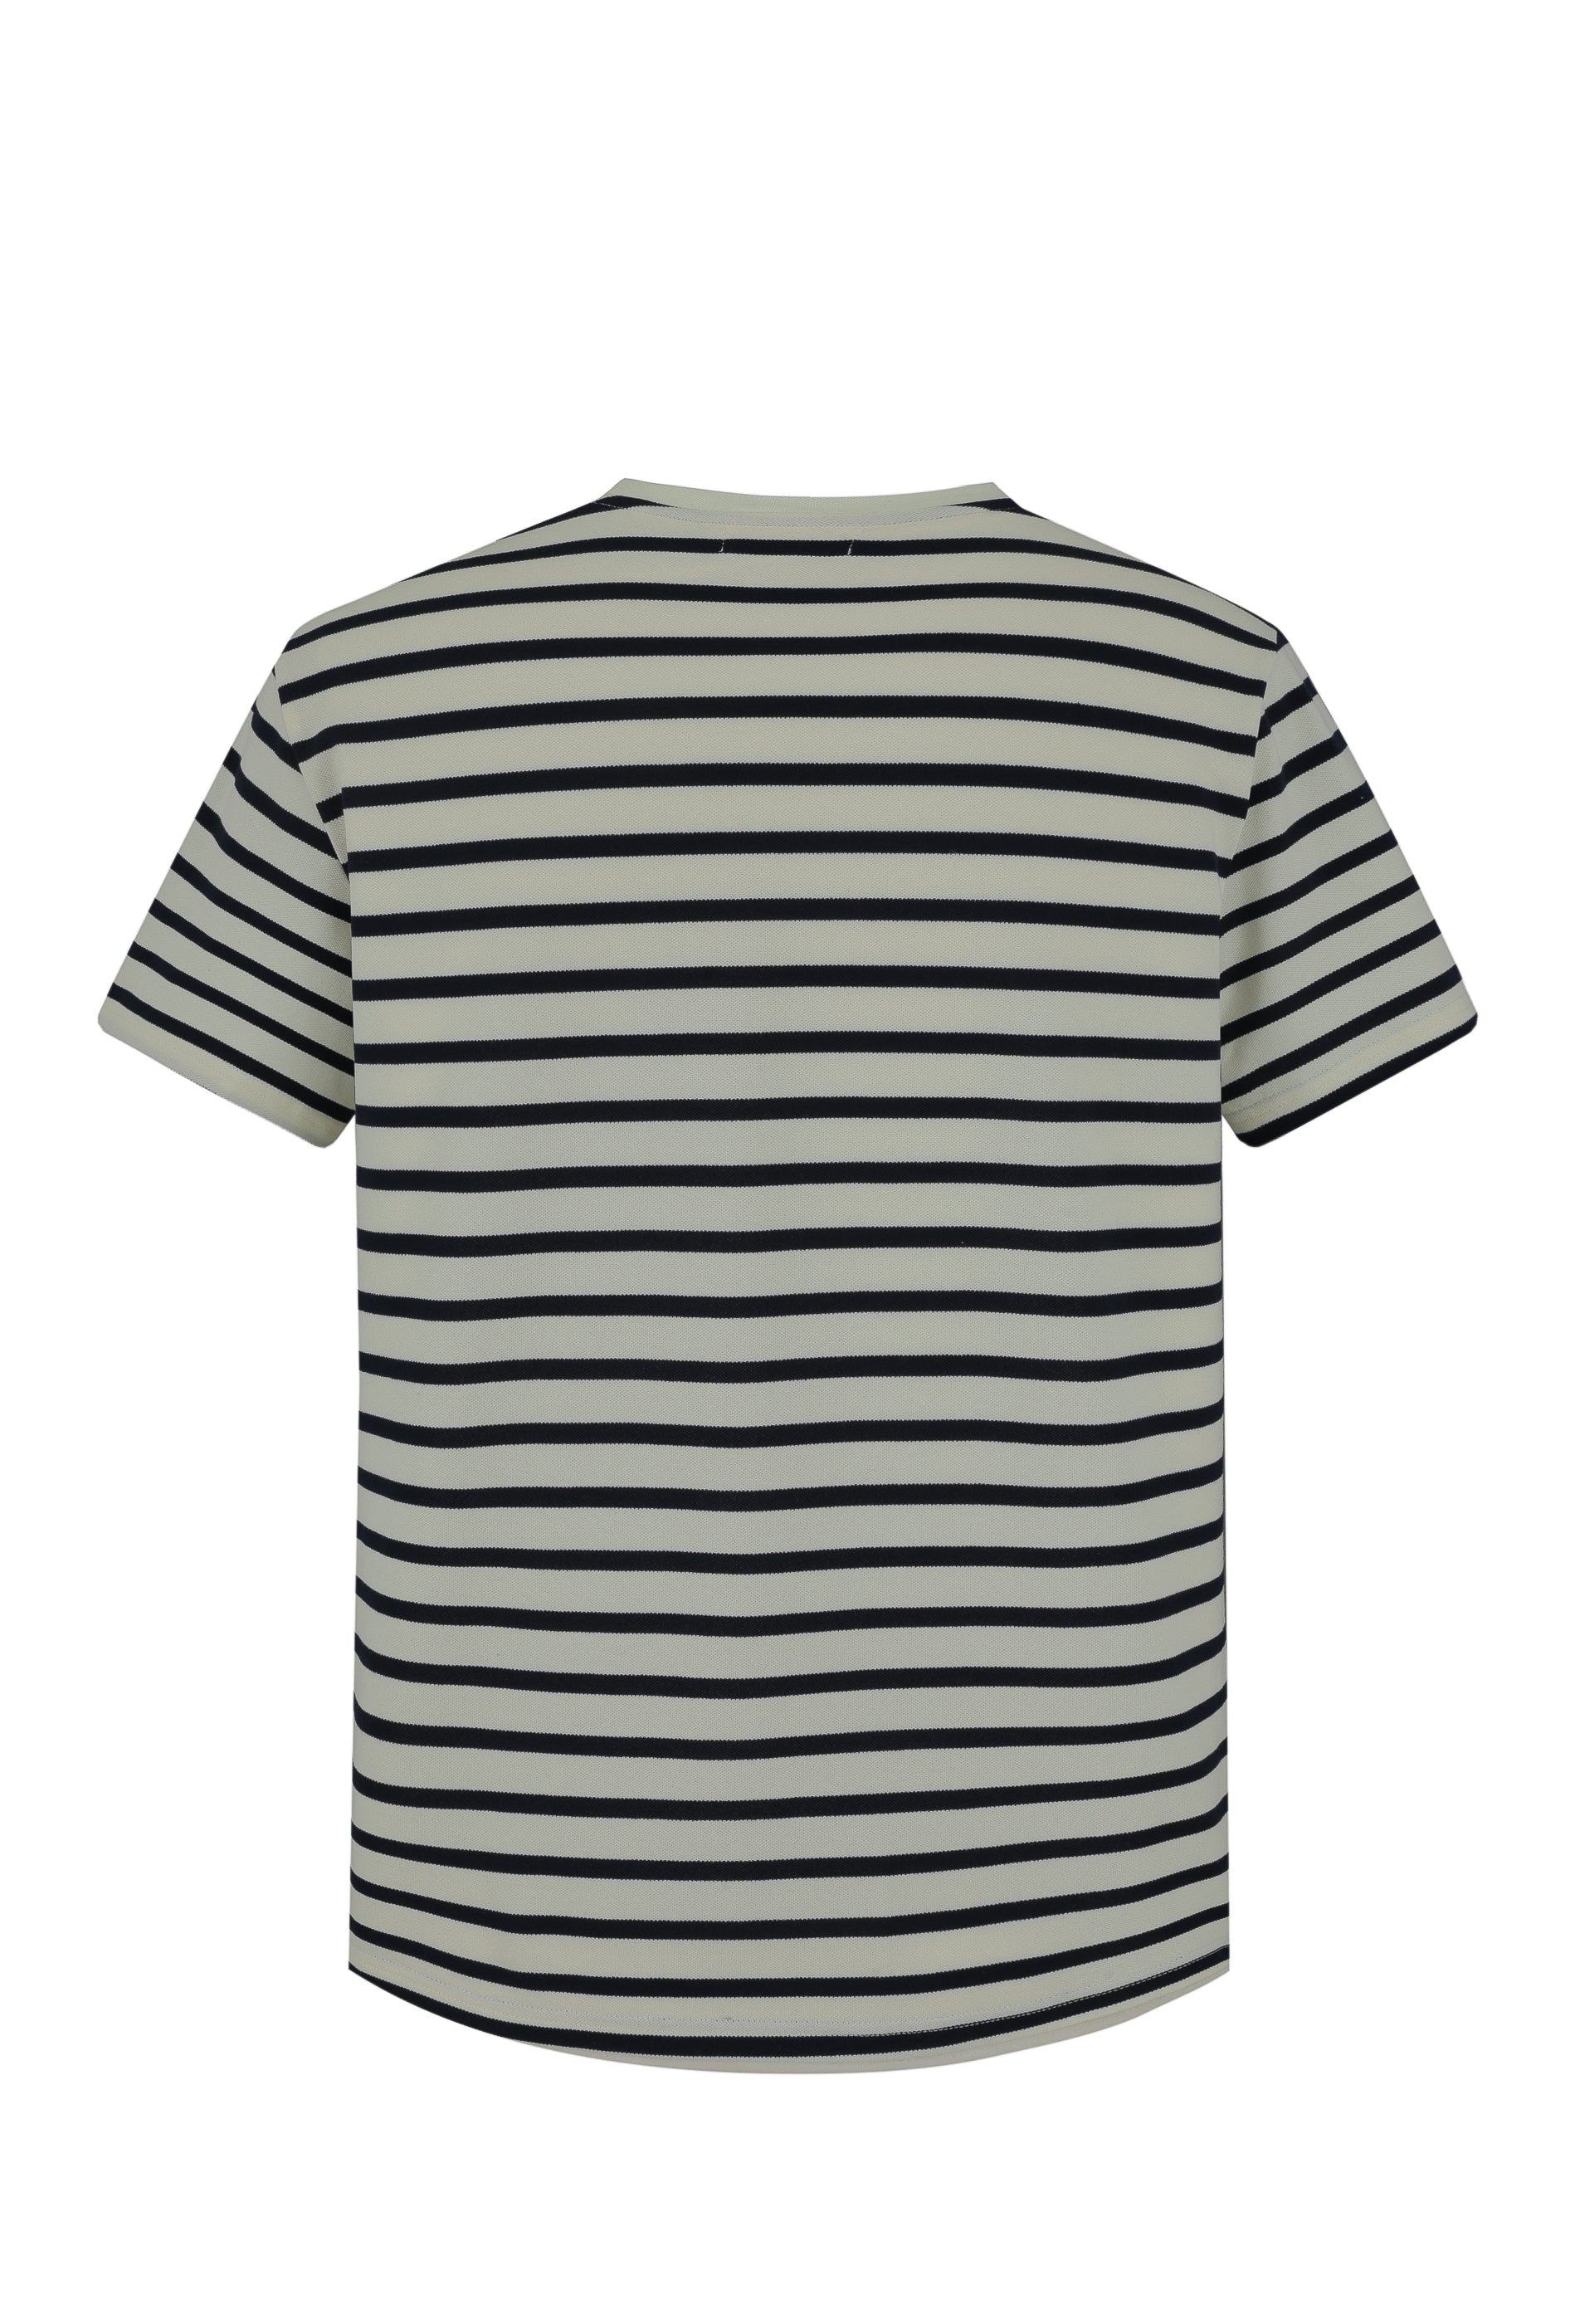 Short-sleeved striped t-shirt